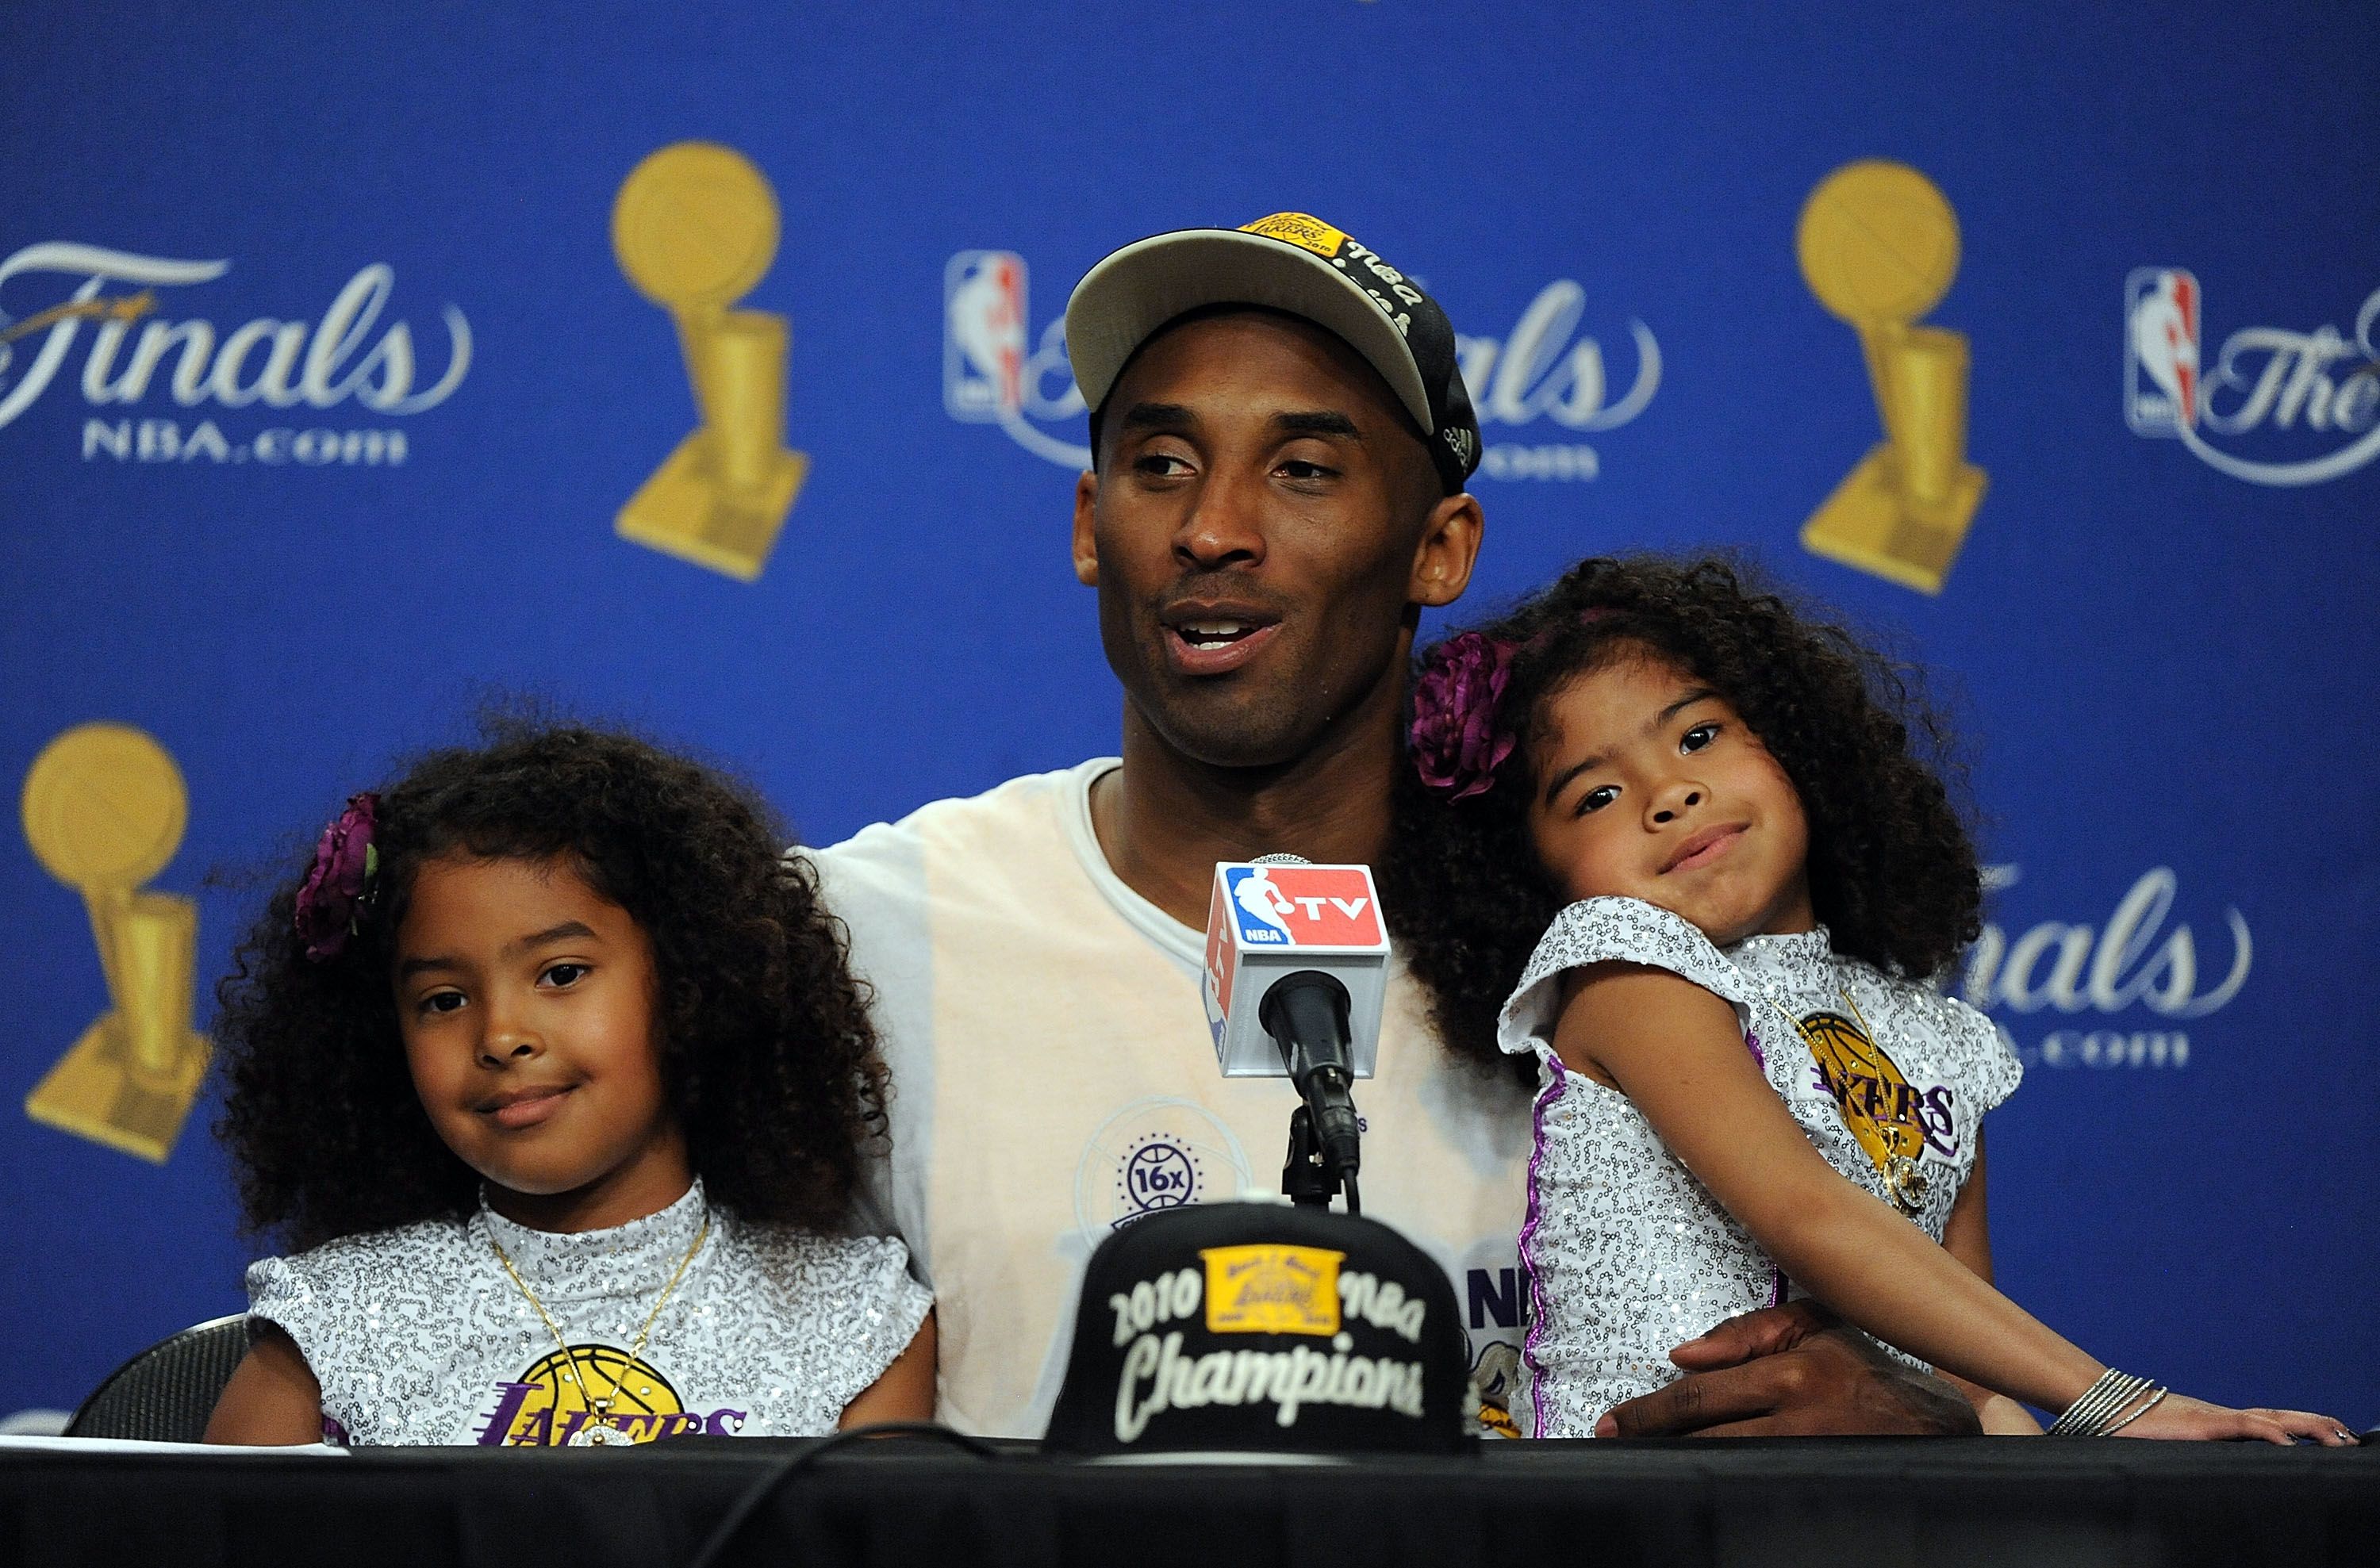 Anchor's touching Kobe Bryant tribute sparks #GirlDad trend